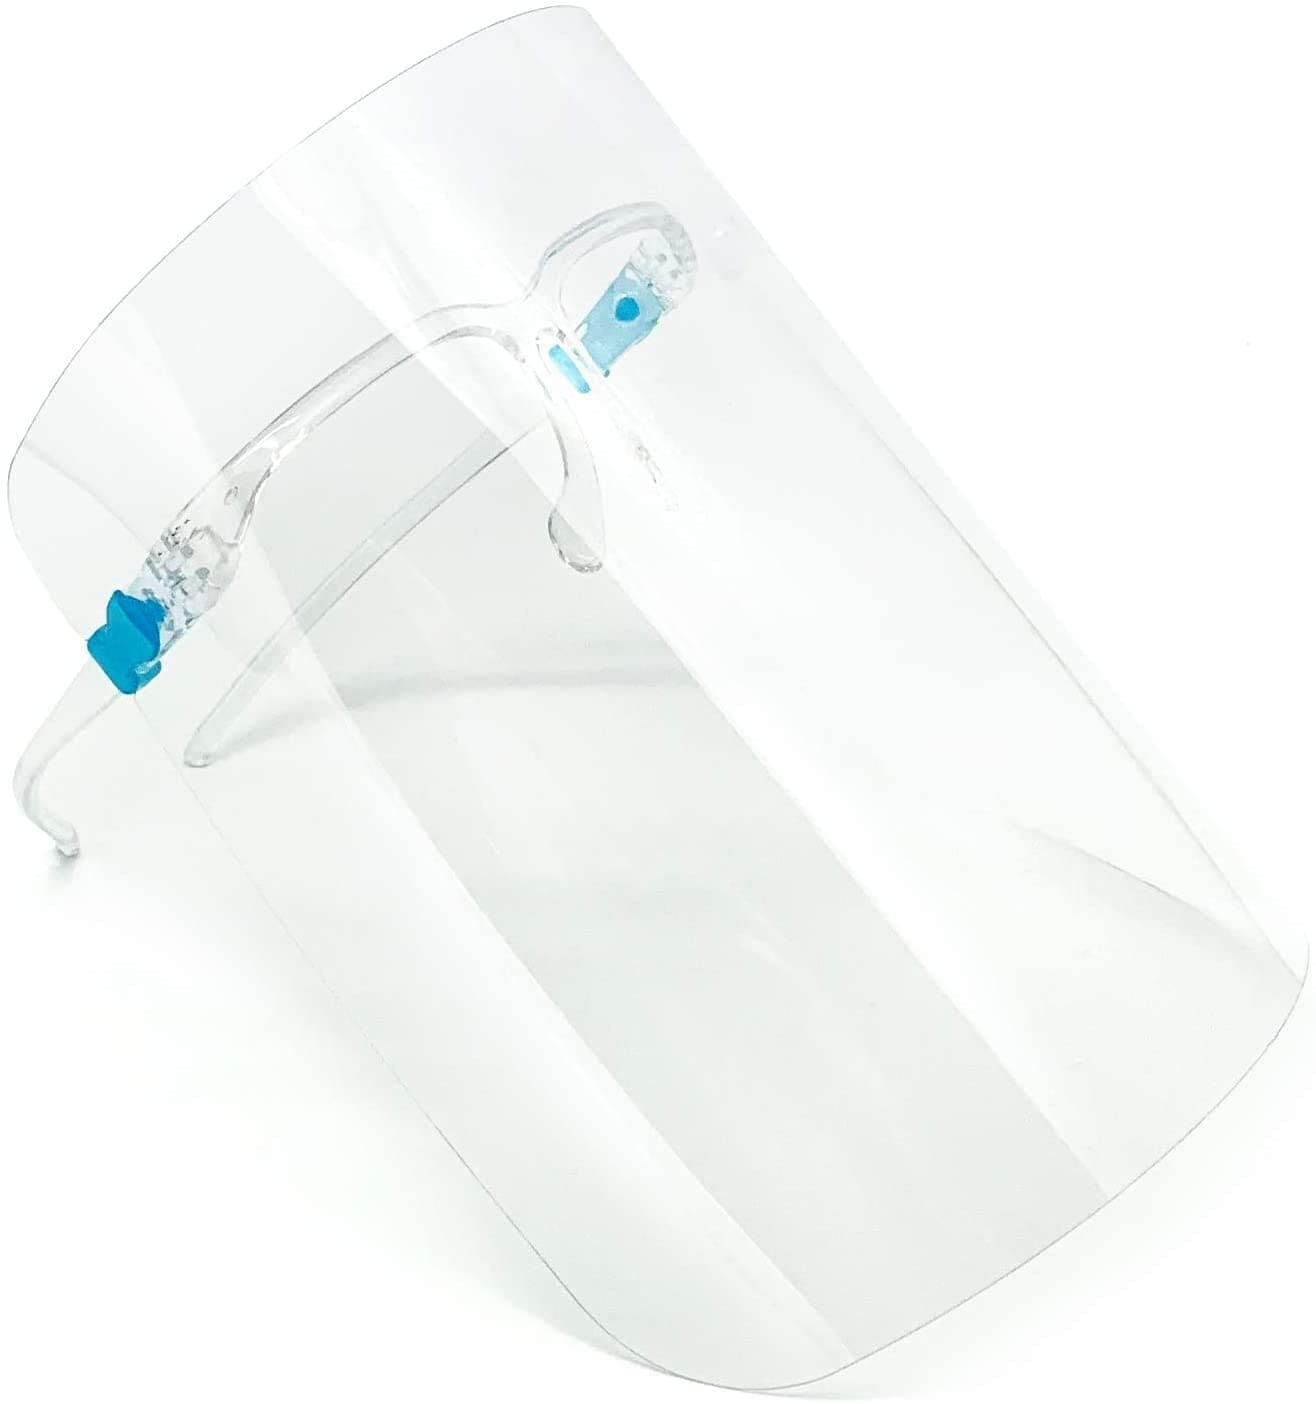 MOBB Face Shield With Anti-Fog Reusable Glasses - Senior.com Protective Eyewear